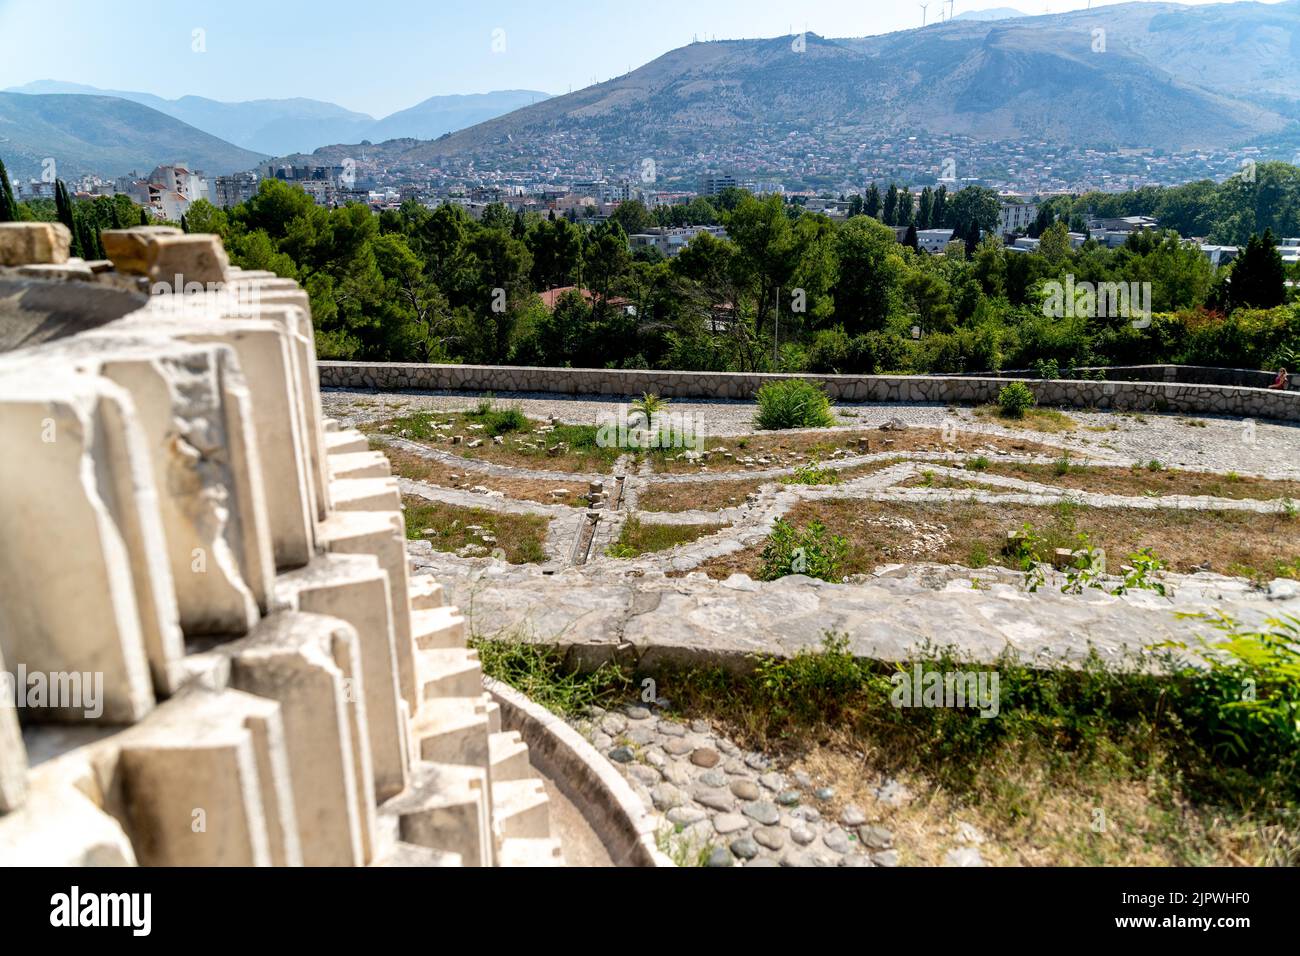 Mostar partyzan spomenik in Bosna und Herzegowina Stockfoto